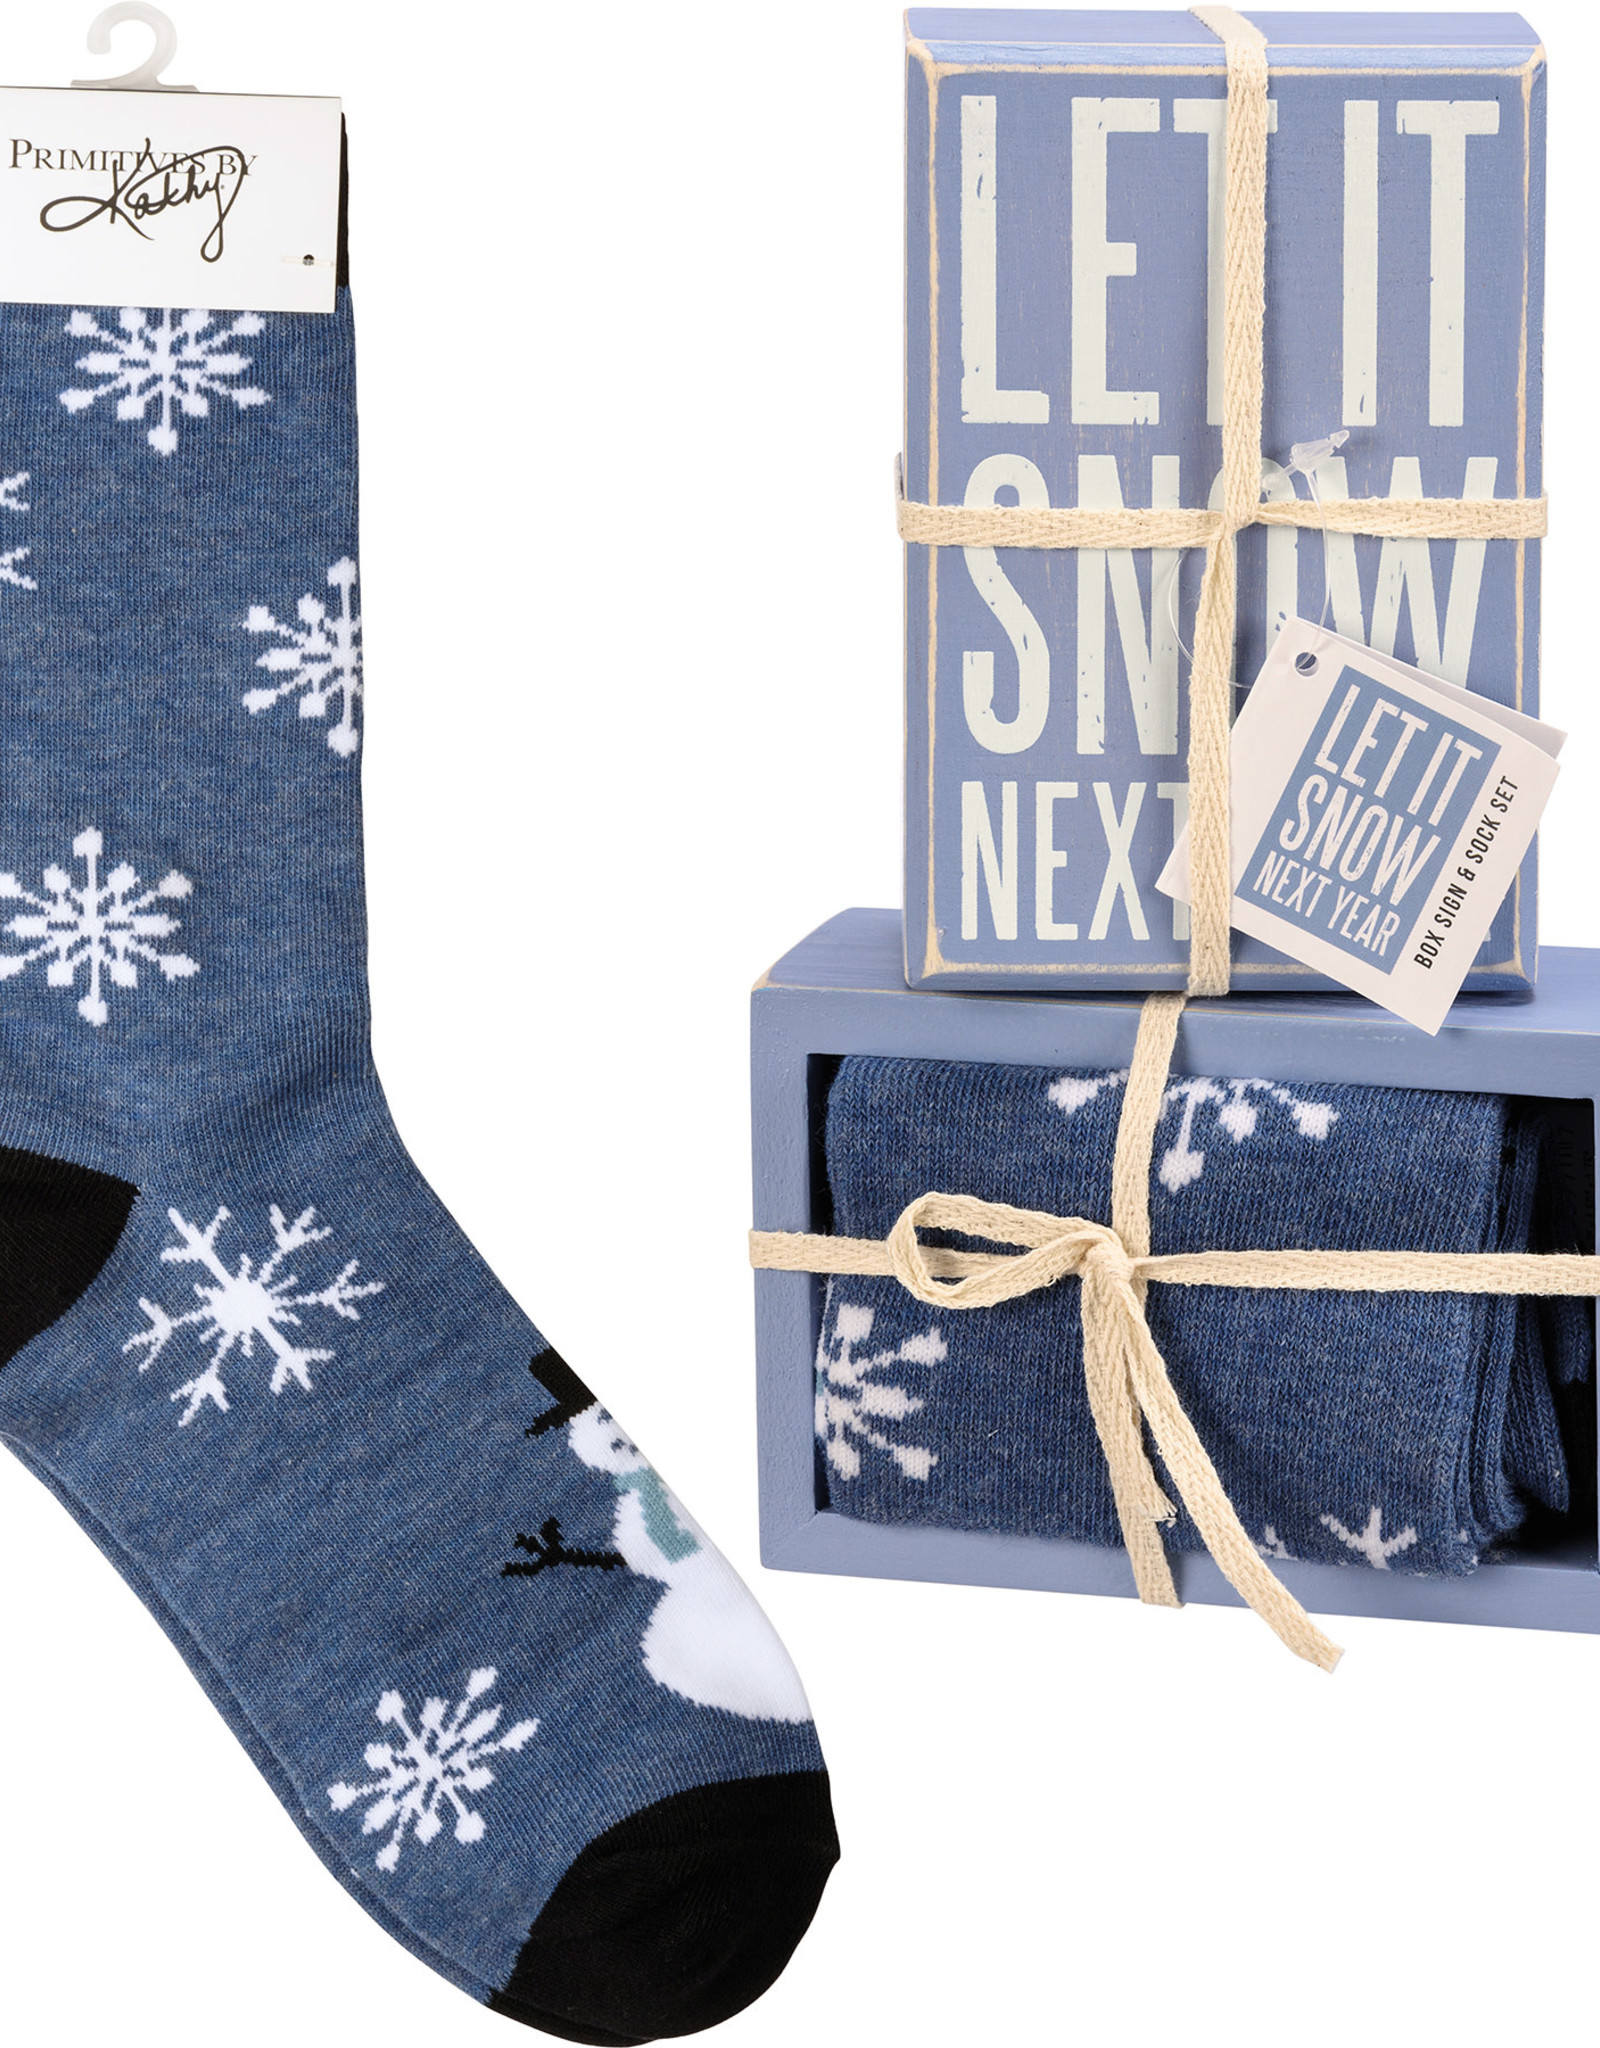 Box Sign & Sock Set - Let It Snow Next Year